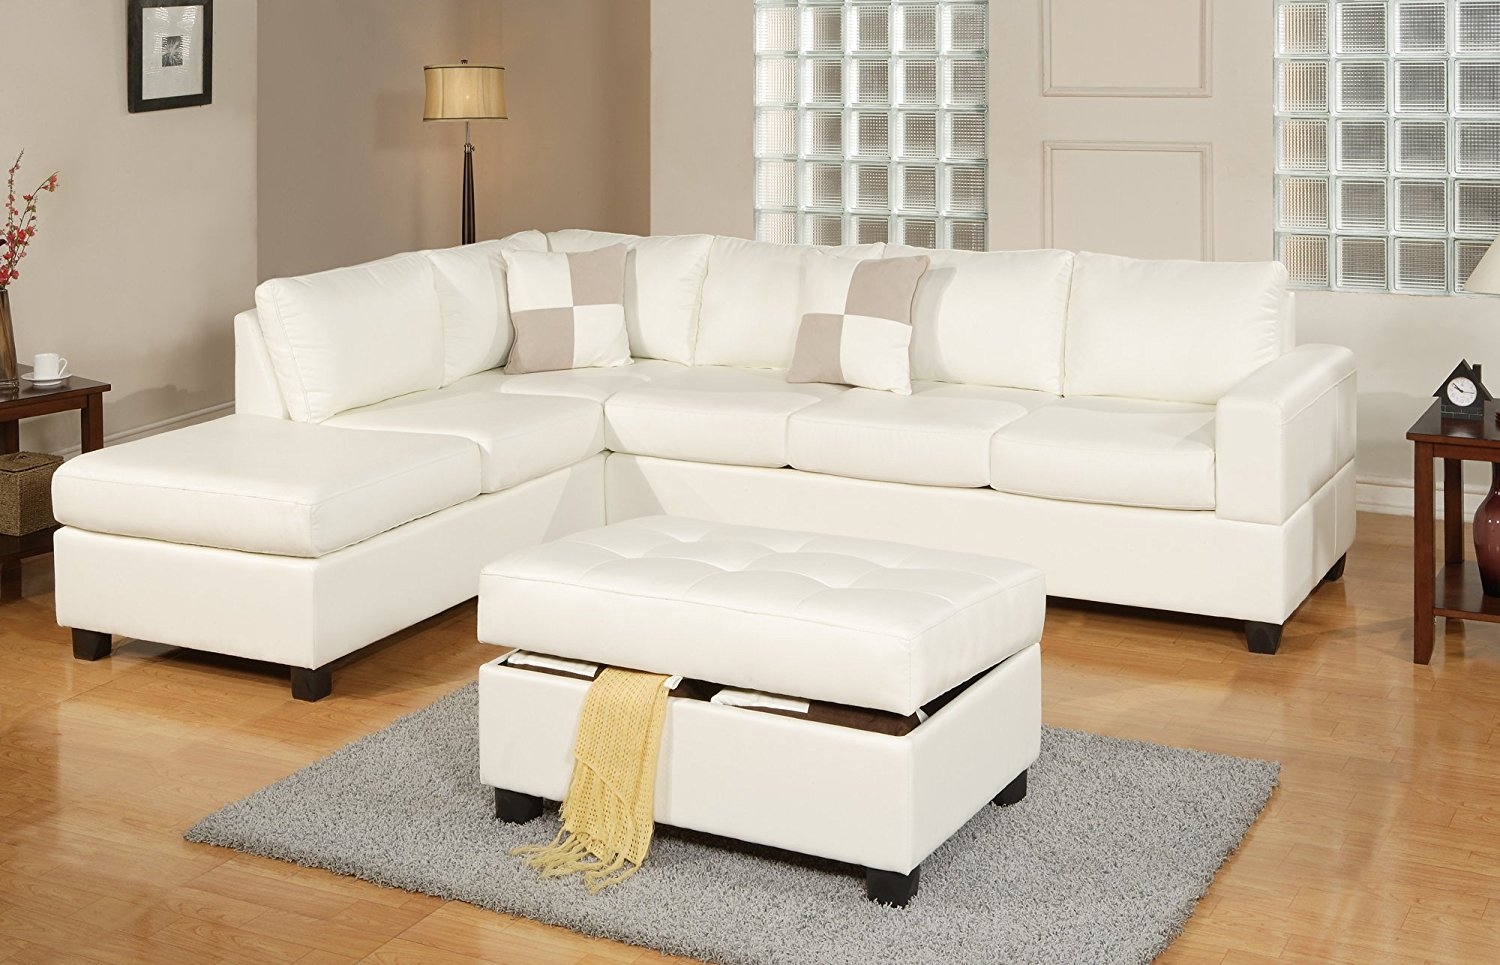 White leather modular lounge